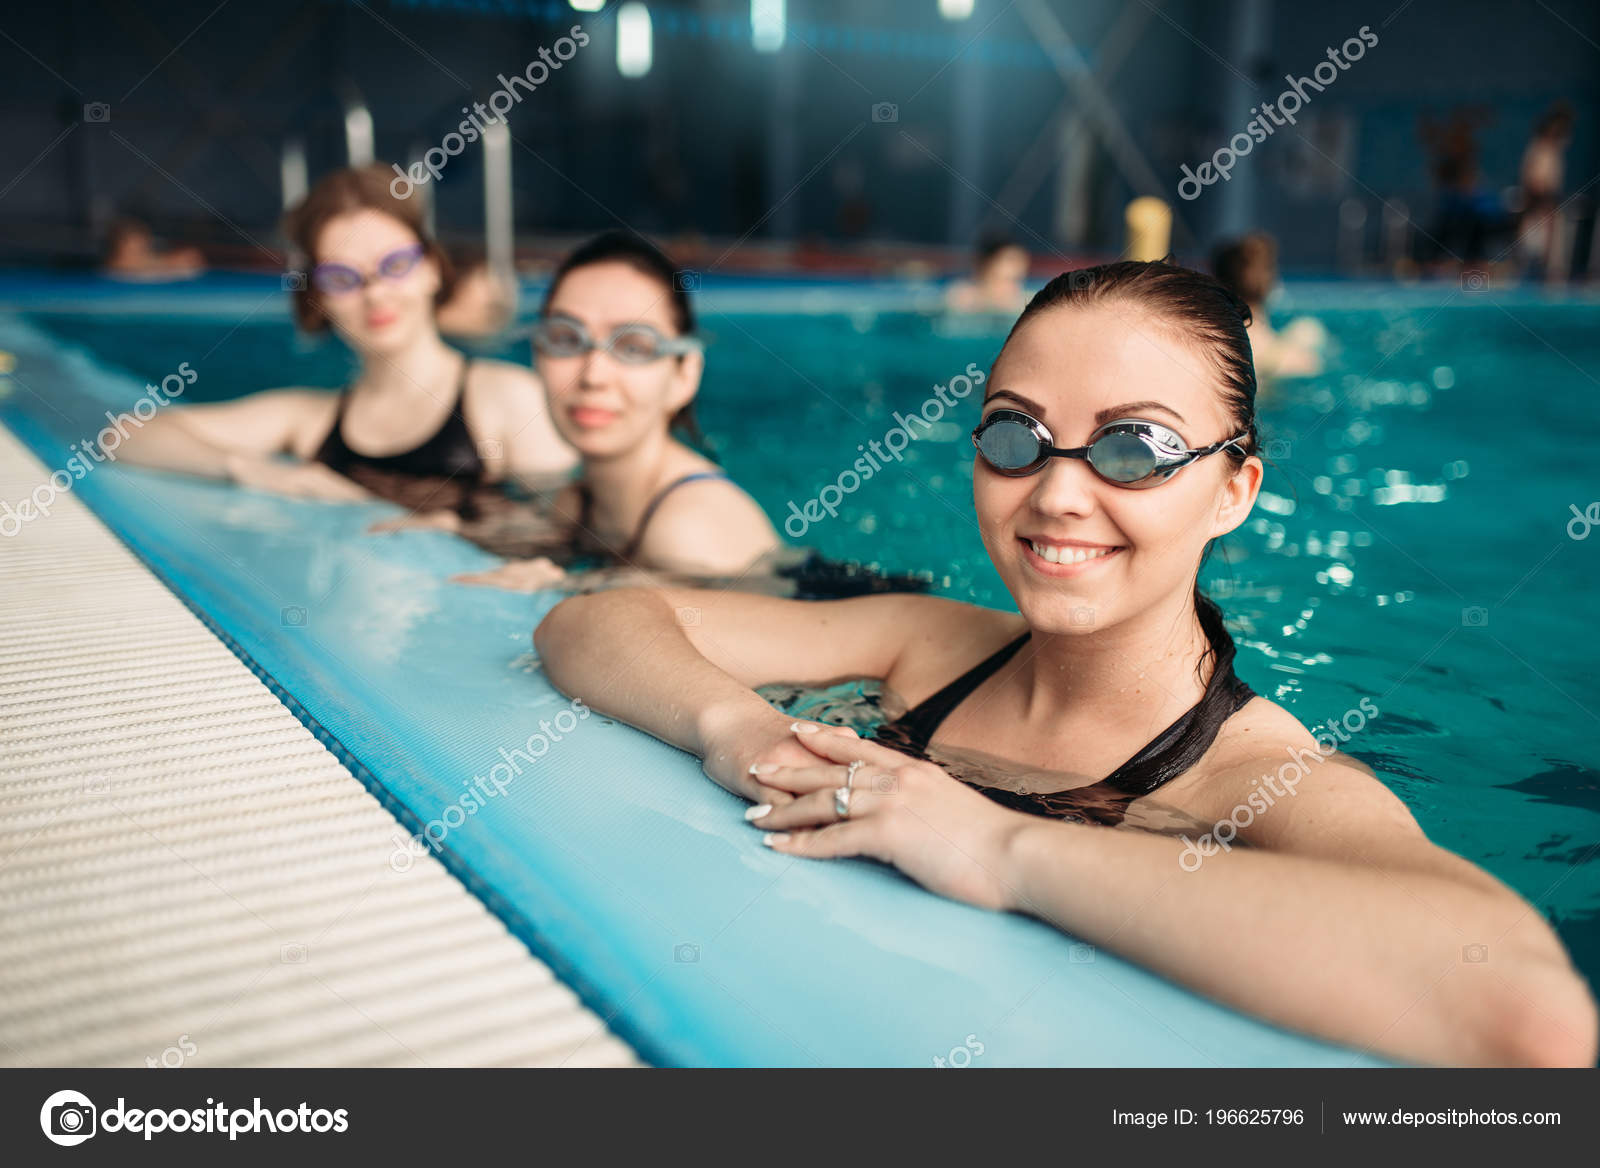 https://st4.depositphotos.com/1006542/19662/i/1600/depositphotos_196625796-stock-photo-female-swimmers-goggles-workout-swimming.jpg